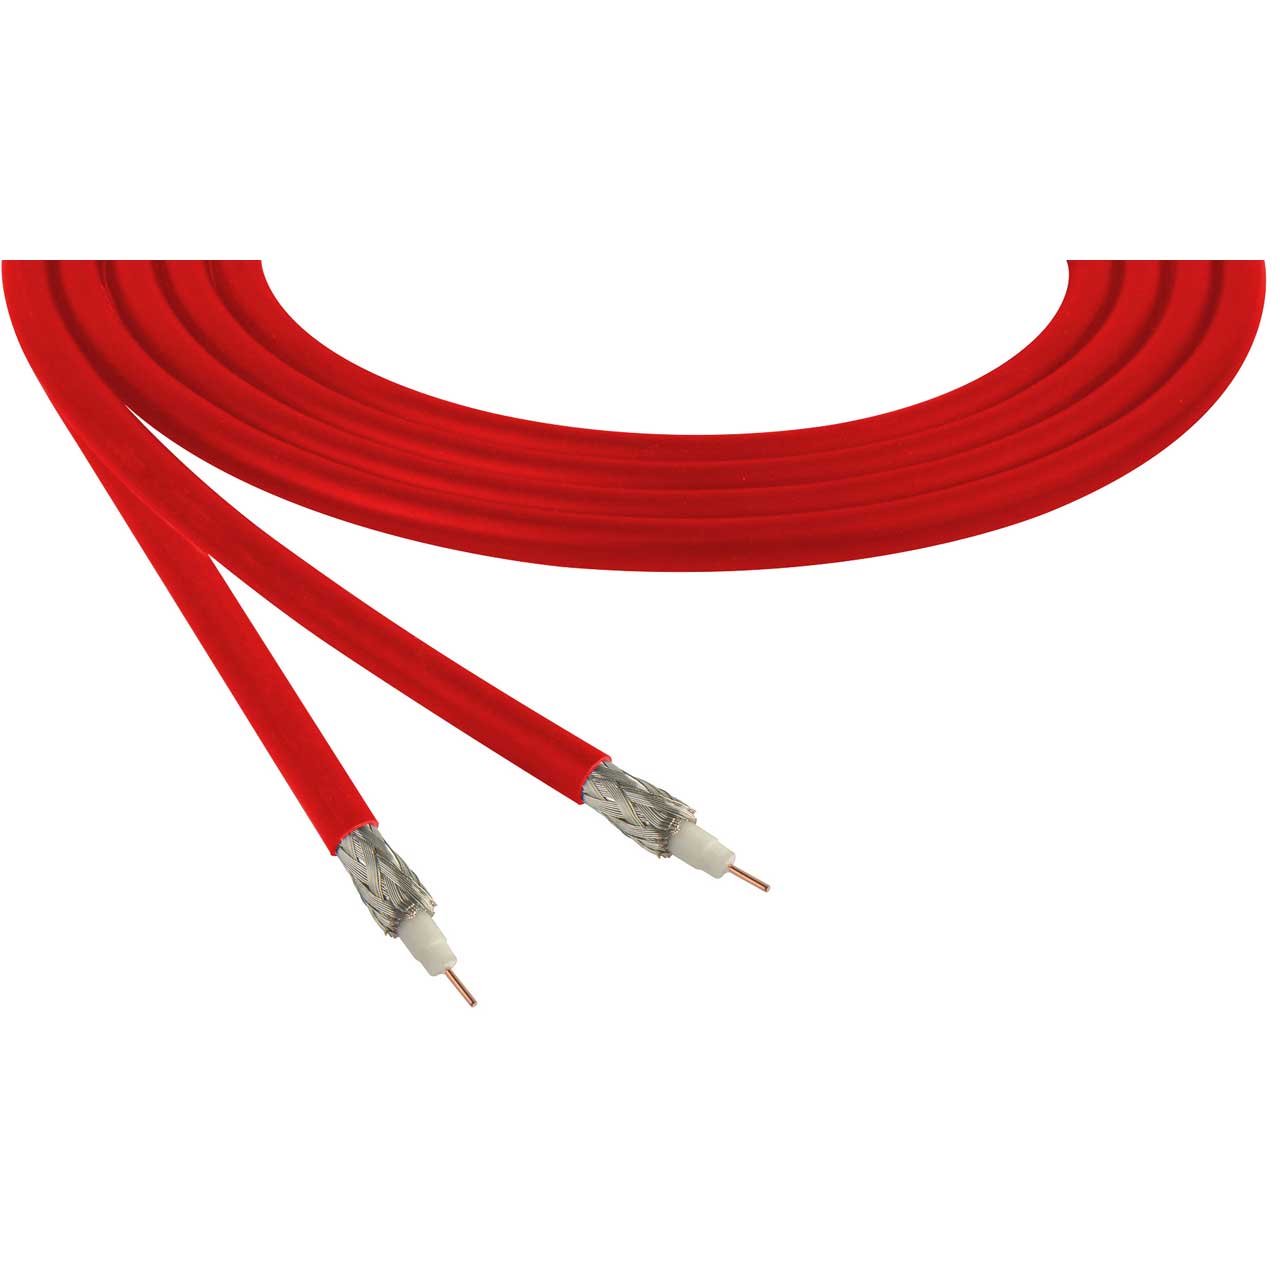 Belden 1855A Sub-Miniature RG59 SDI Digital Coaxial Cable 23 AWG - Red - Per Foot